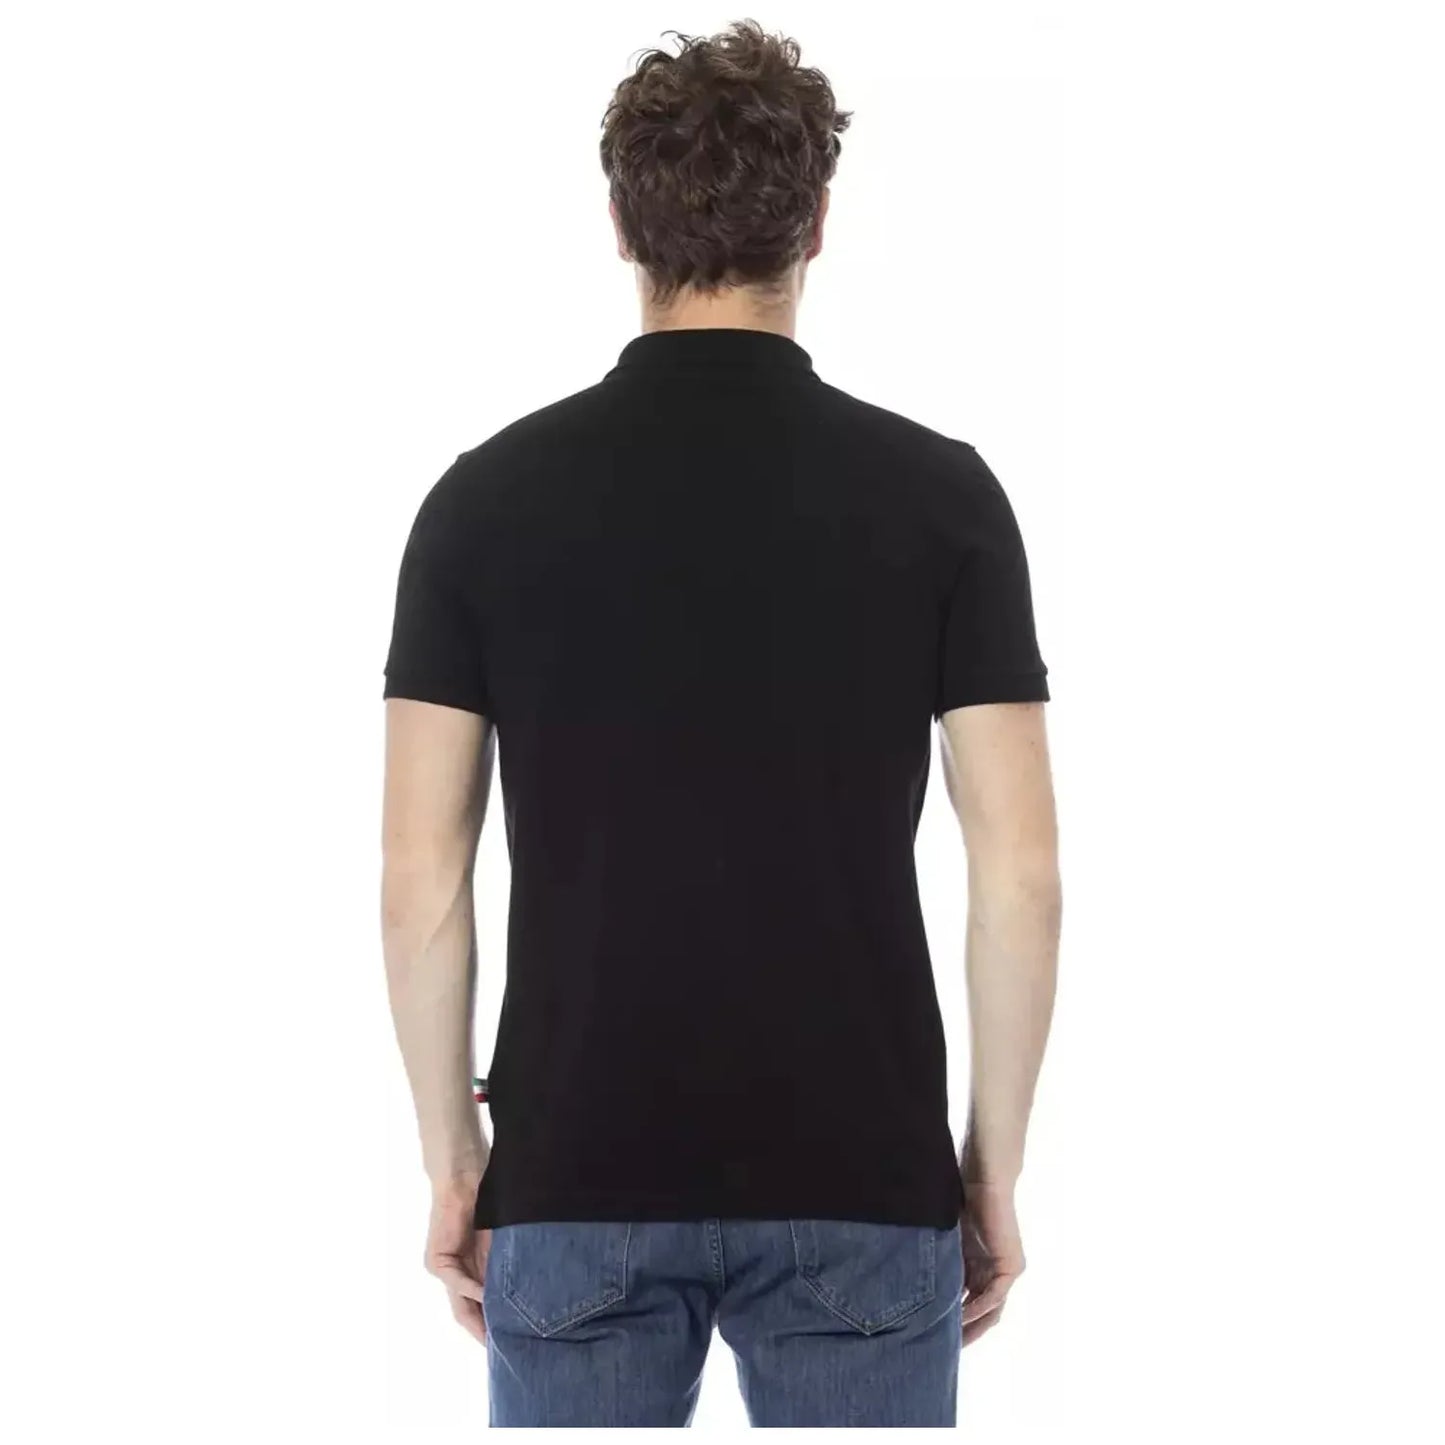 Baldinini Trend Sleek Black Cotton Polo with Chic Embroidery black-cotton-polo-shirt-15